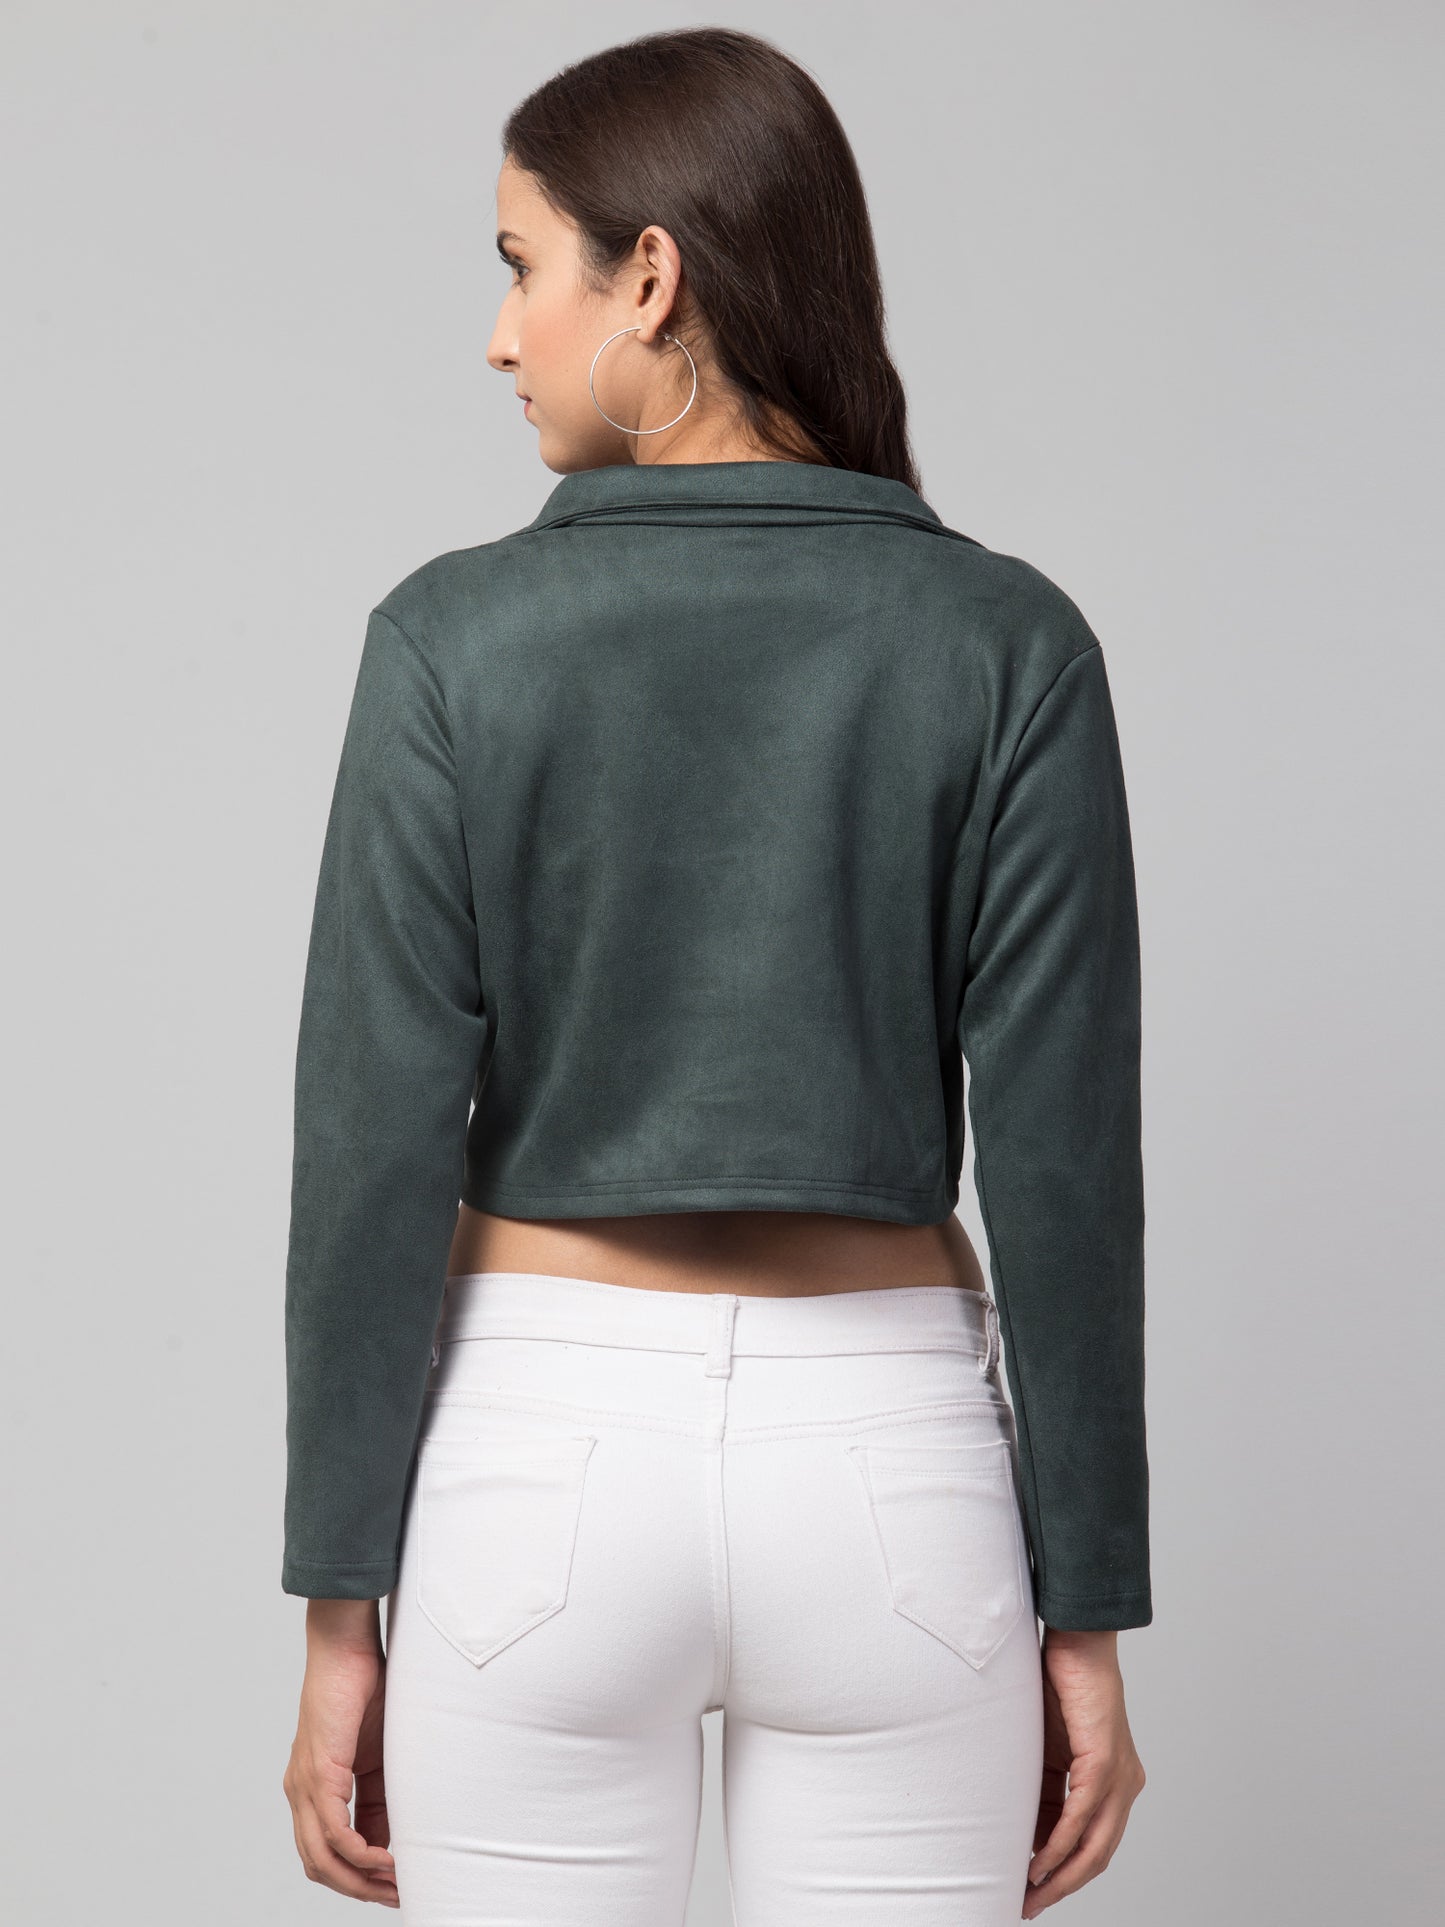 Green Color Suede Fabric Girls Short Blazer